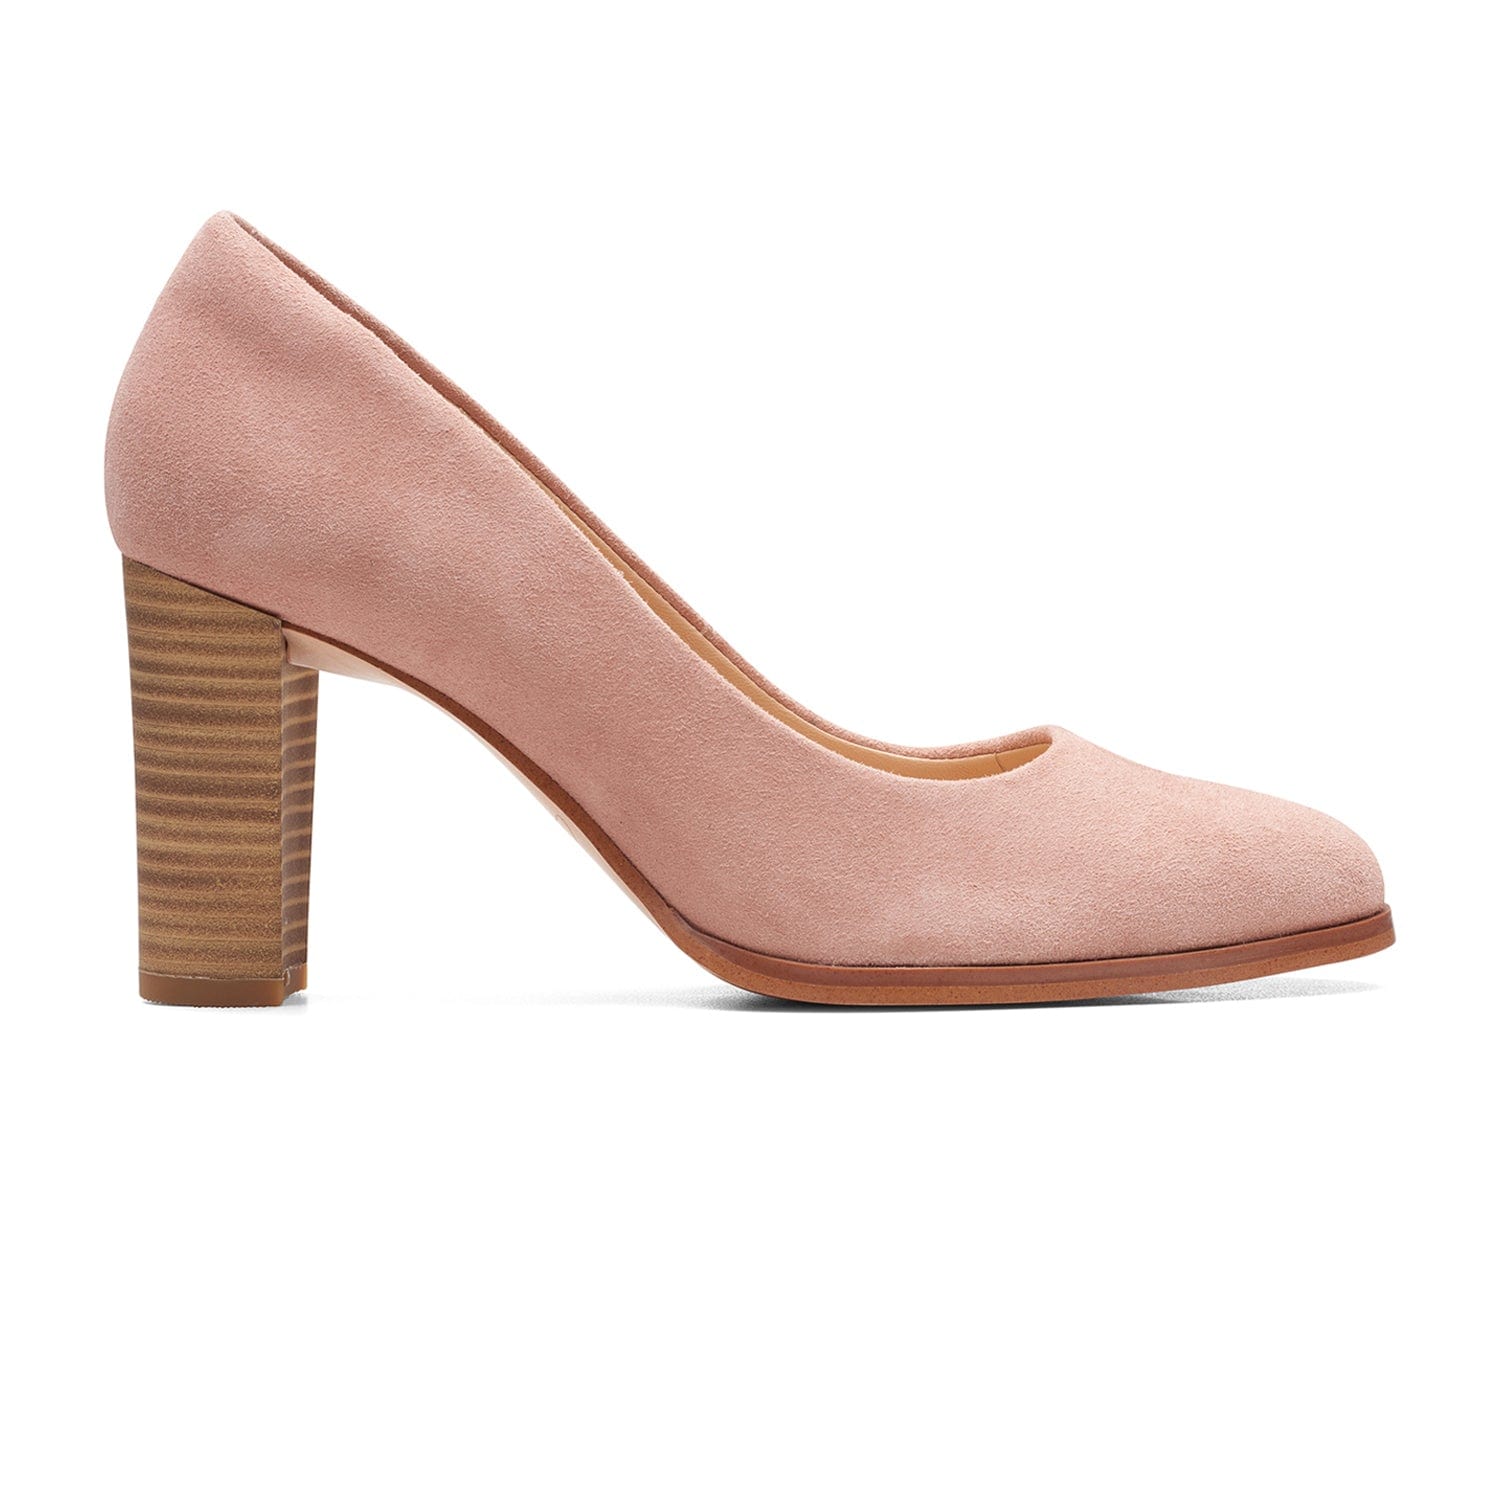 Clarks Kaylin Cara 2 Shoes - Rose Suede - 261657844 - D Width (Standard Fit)